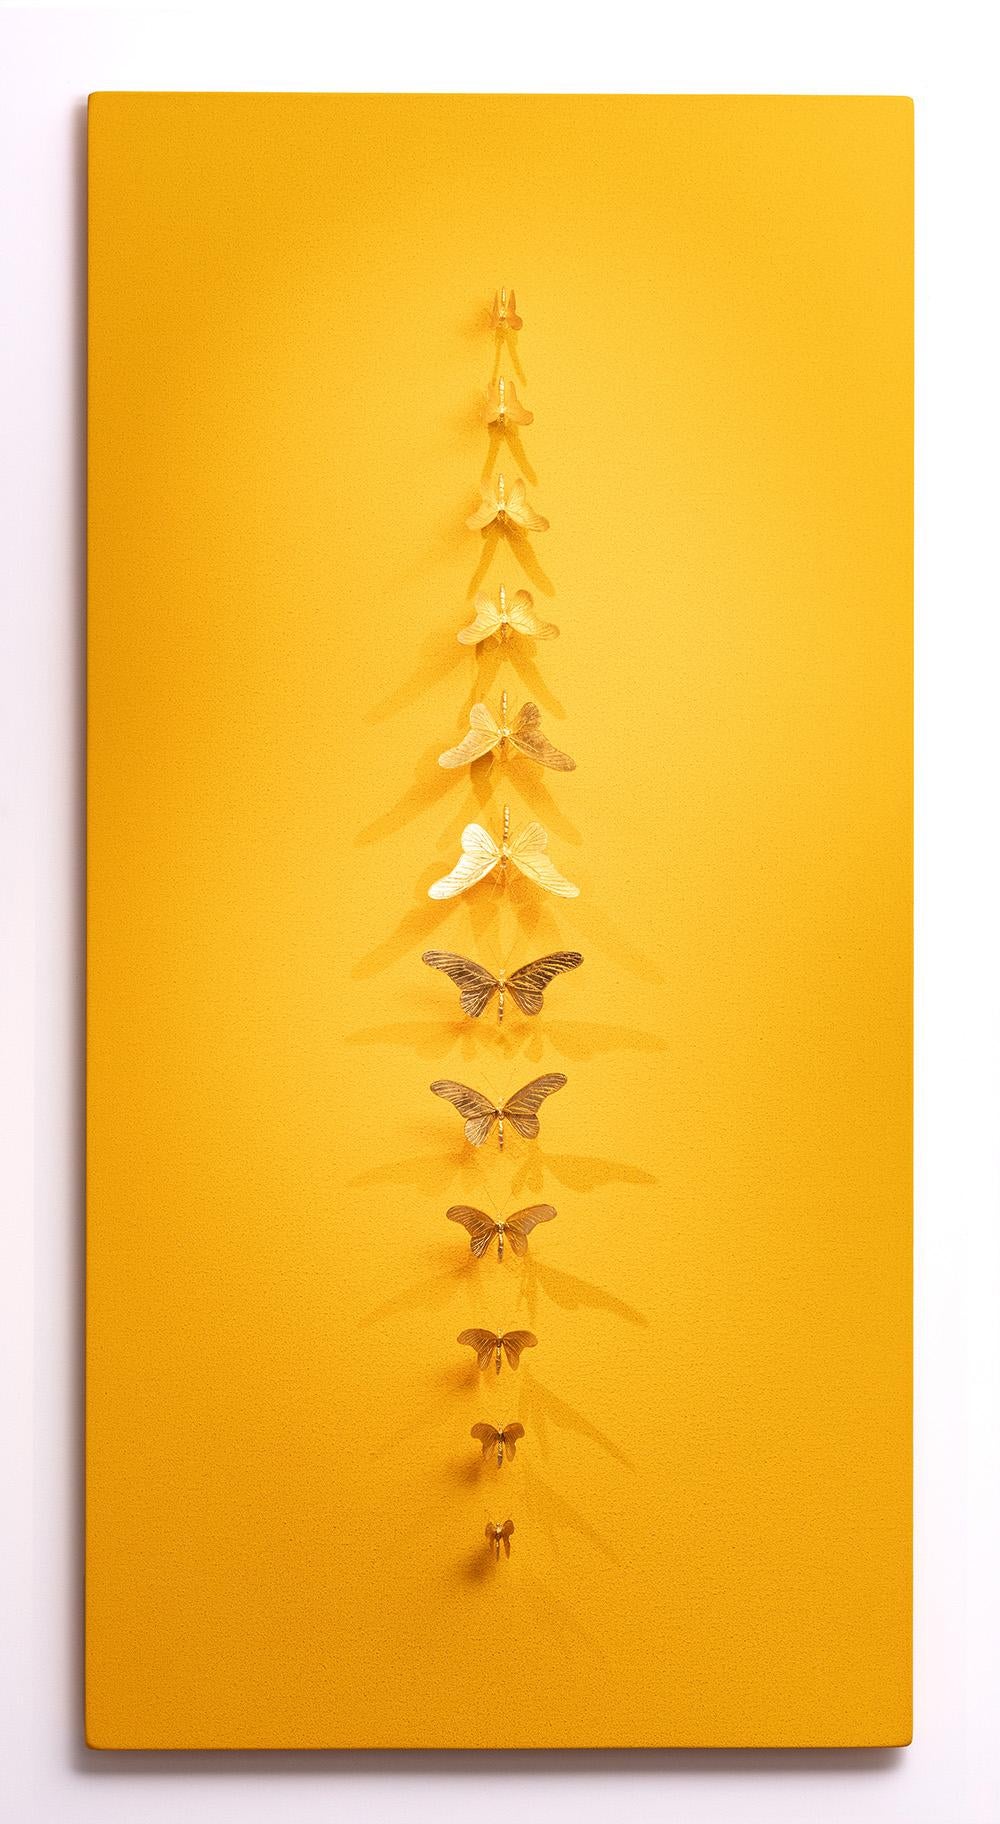 Samuel Dejong Figurative Painting -  Metamorphosis Redux - 21st Century, Contemporary Figurative, Golden Butterflies